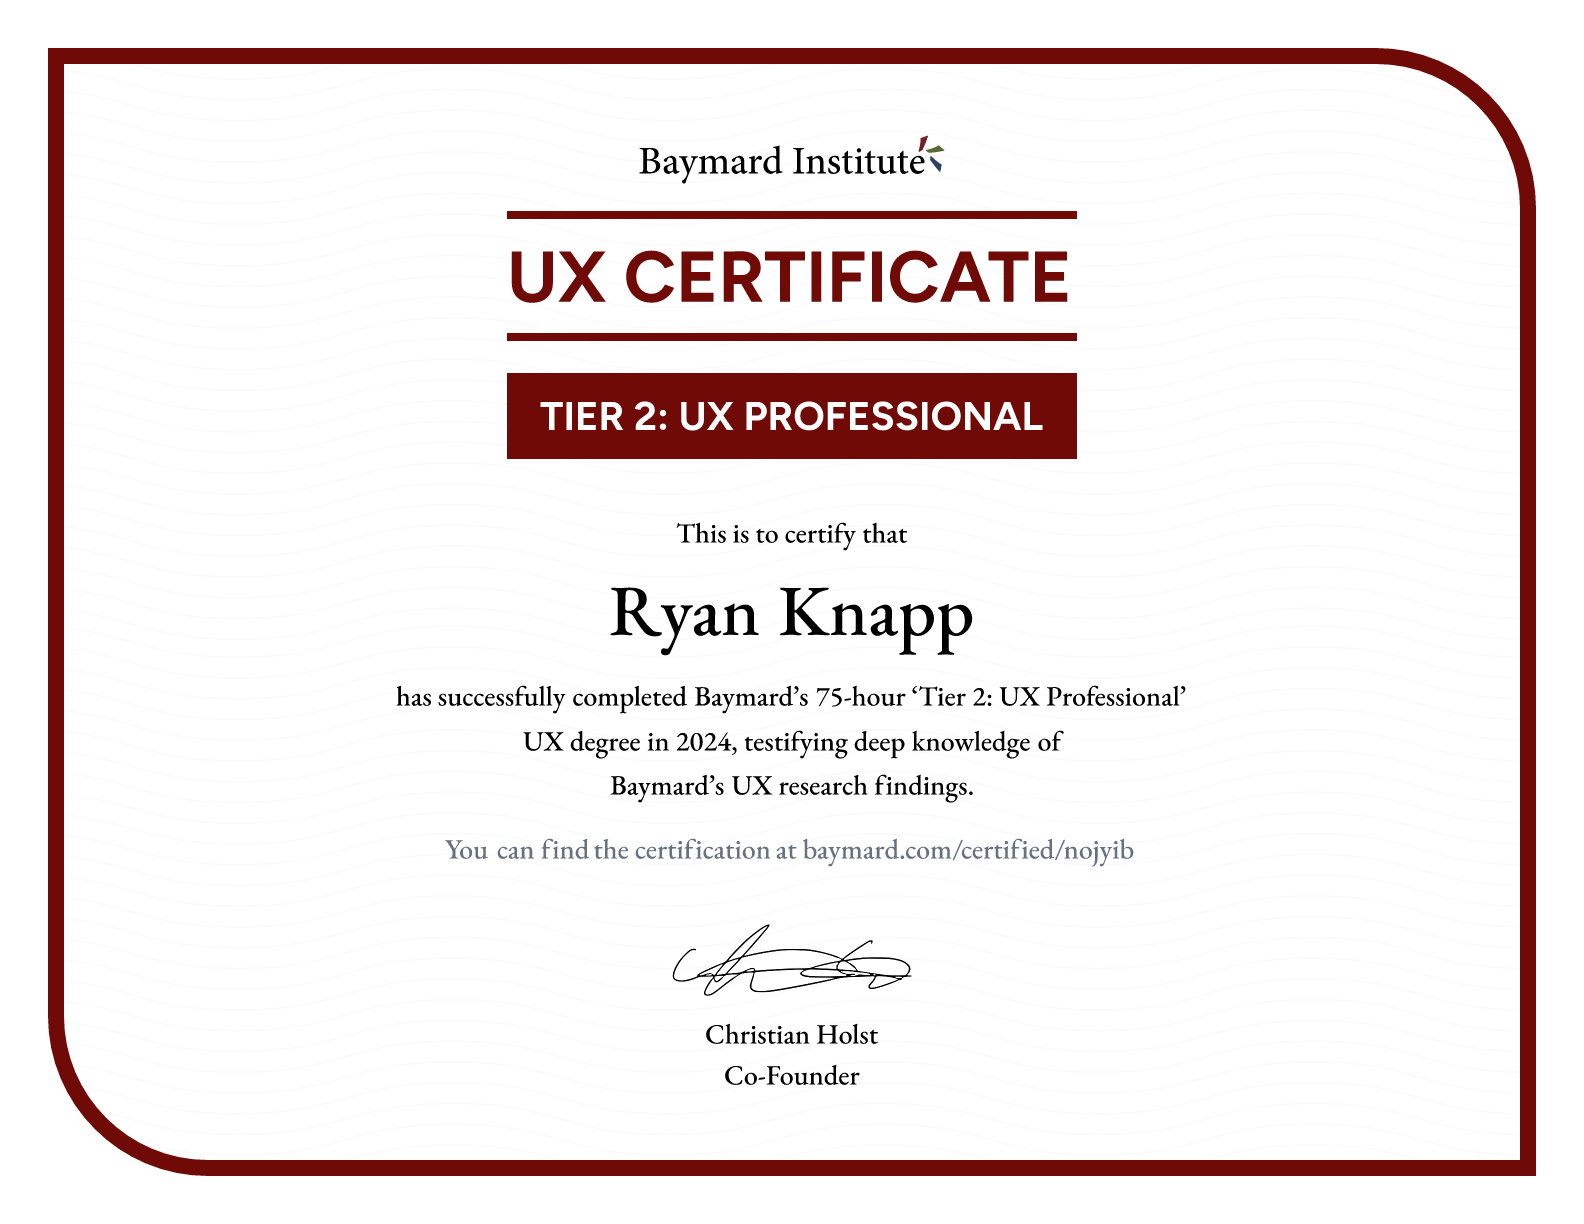 Ryan Knapp’s certificate